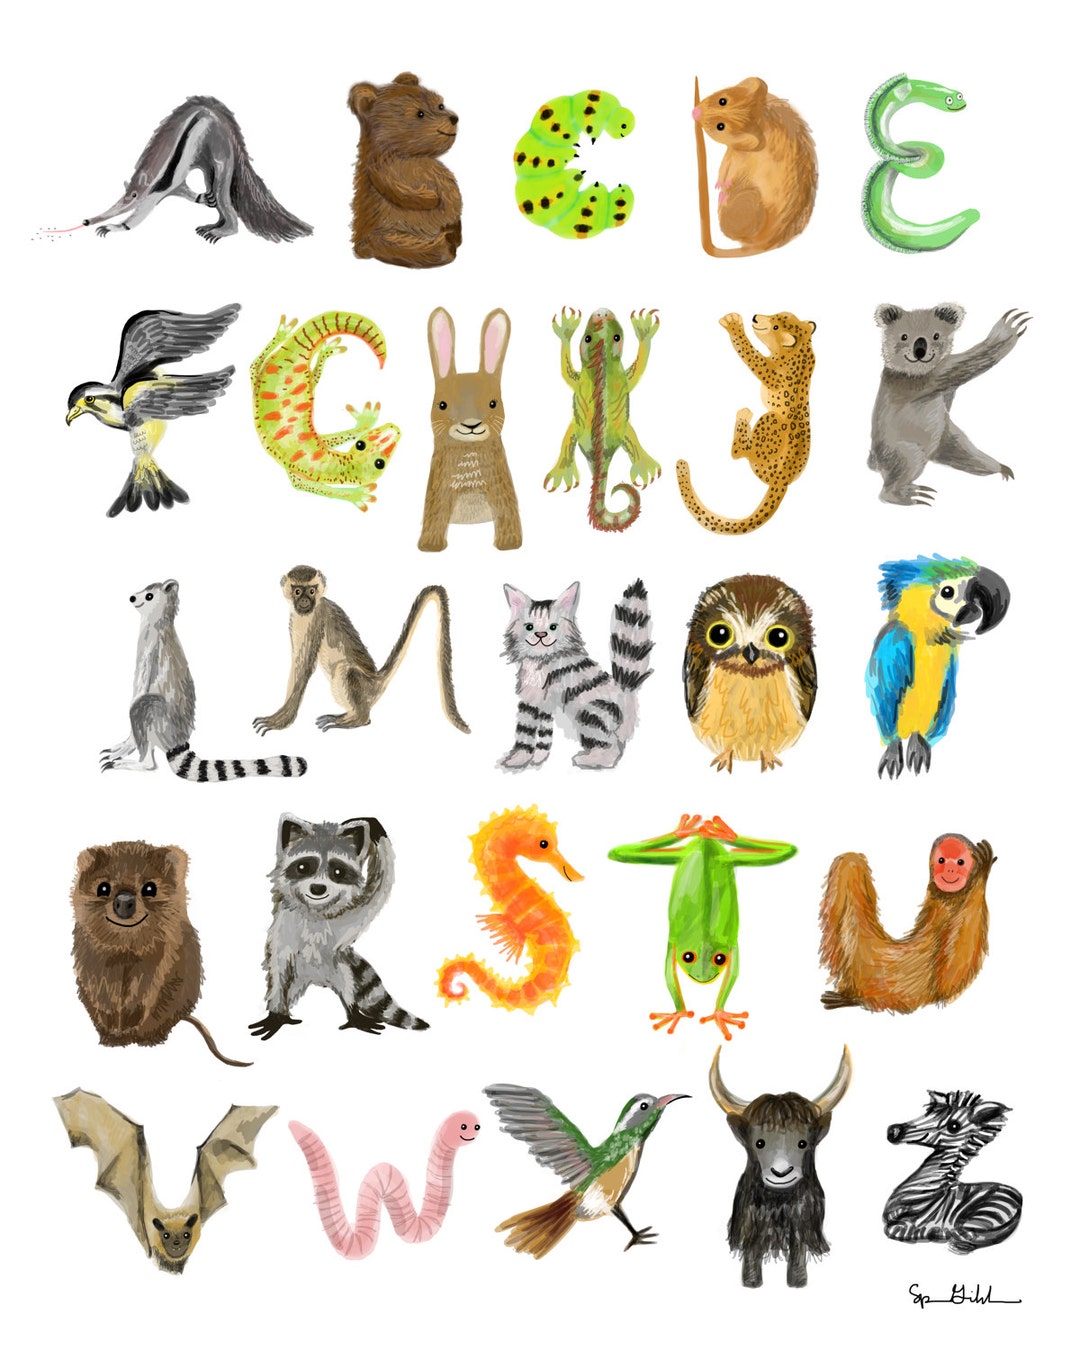 Animal Alphabet Poster – Kit Supply + Co.